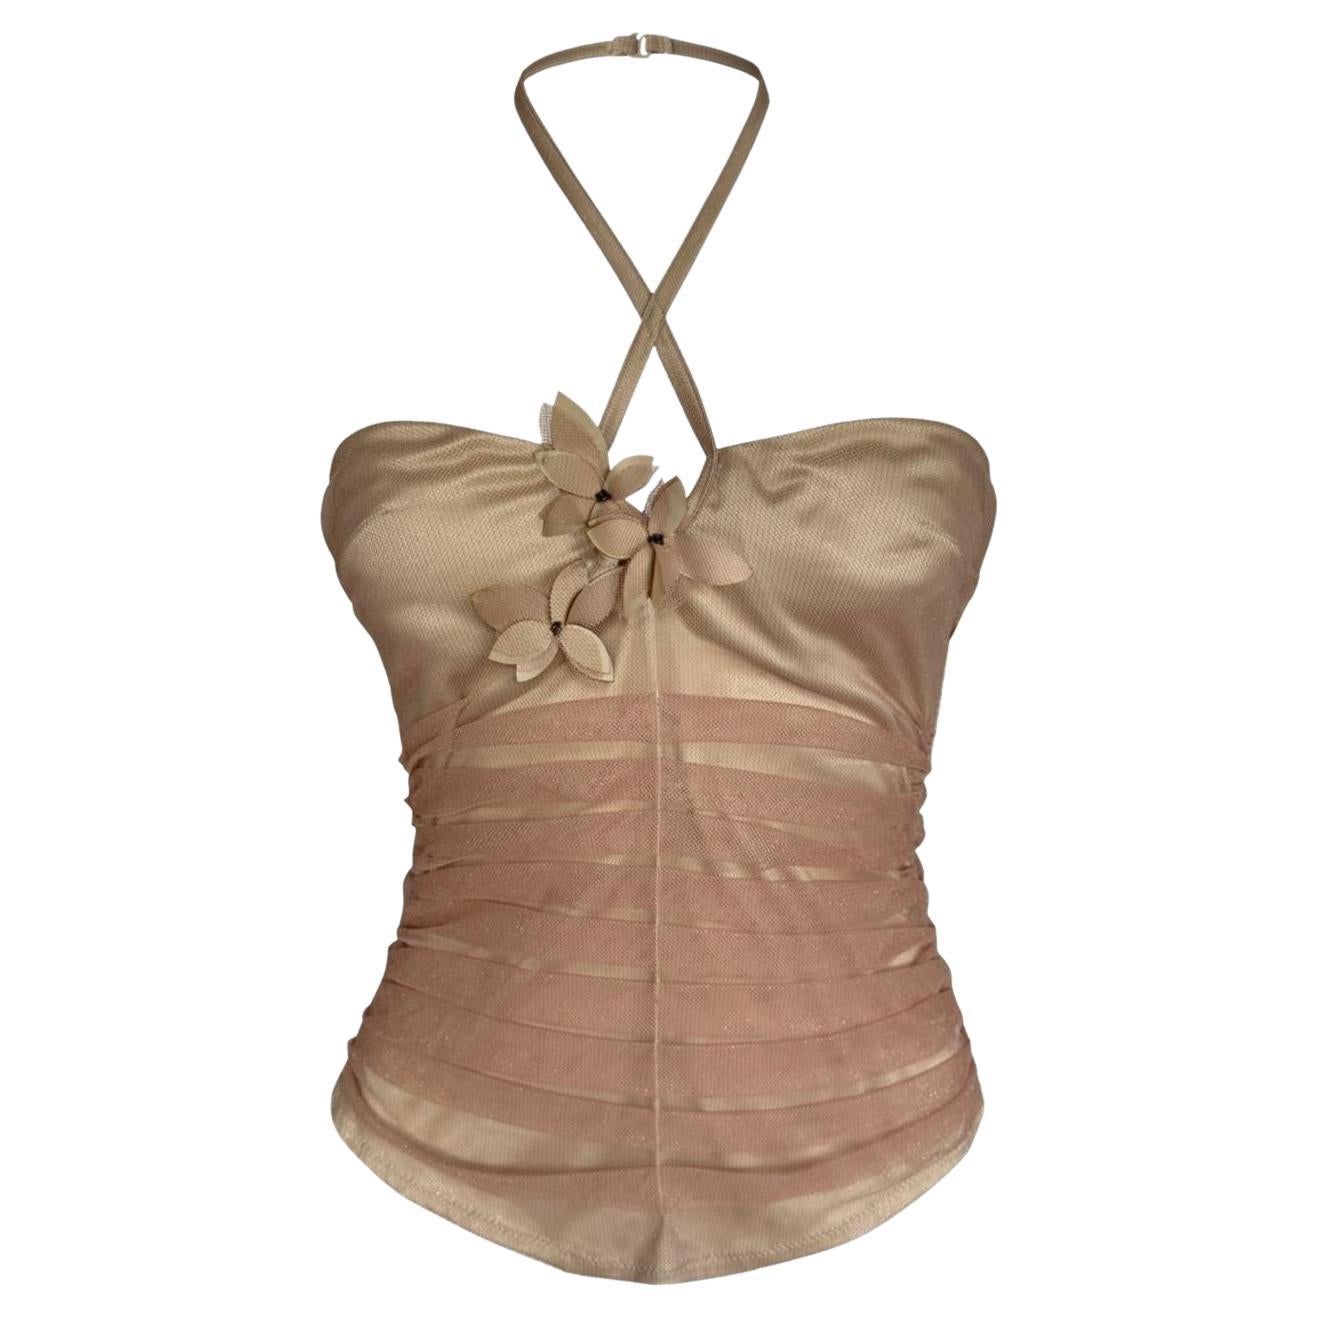 Vintage La Perla halter neck corset with flowers details at